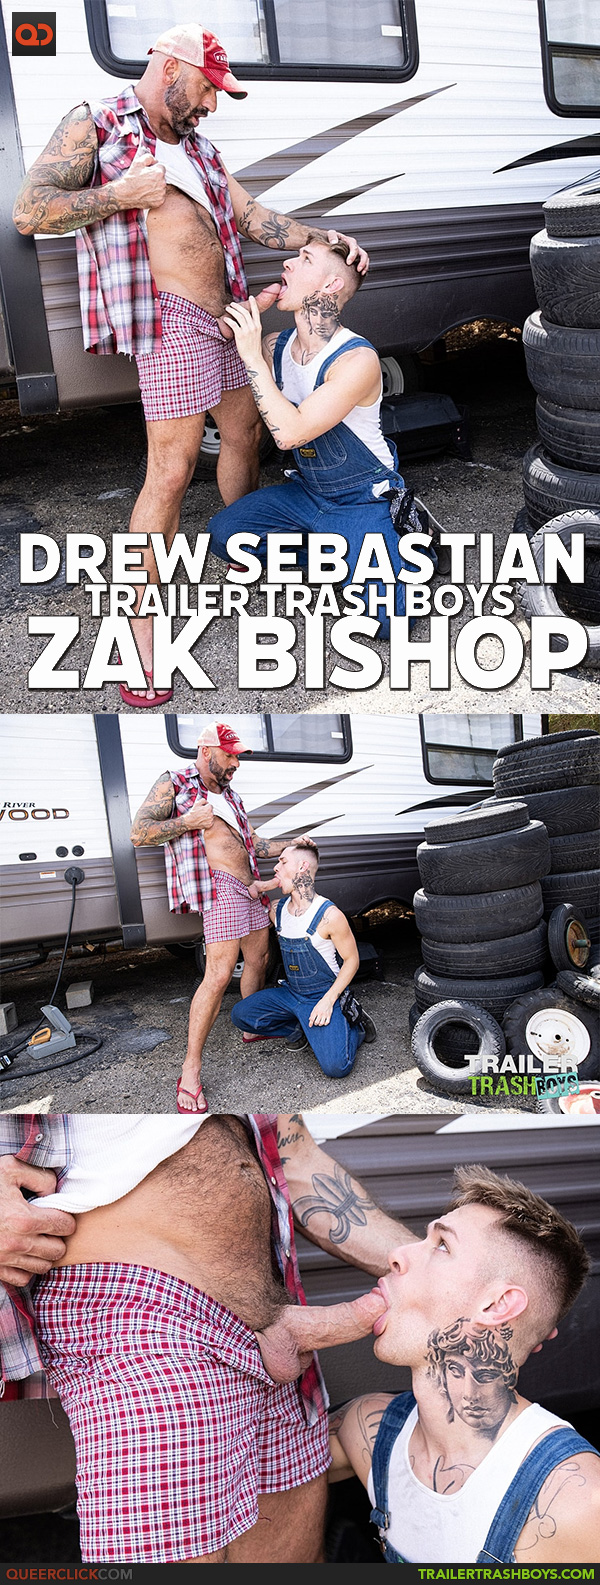 Trailer Trash Boys: Drew Sebastian and Zak Bishop